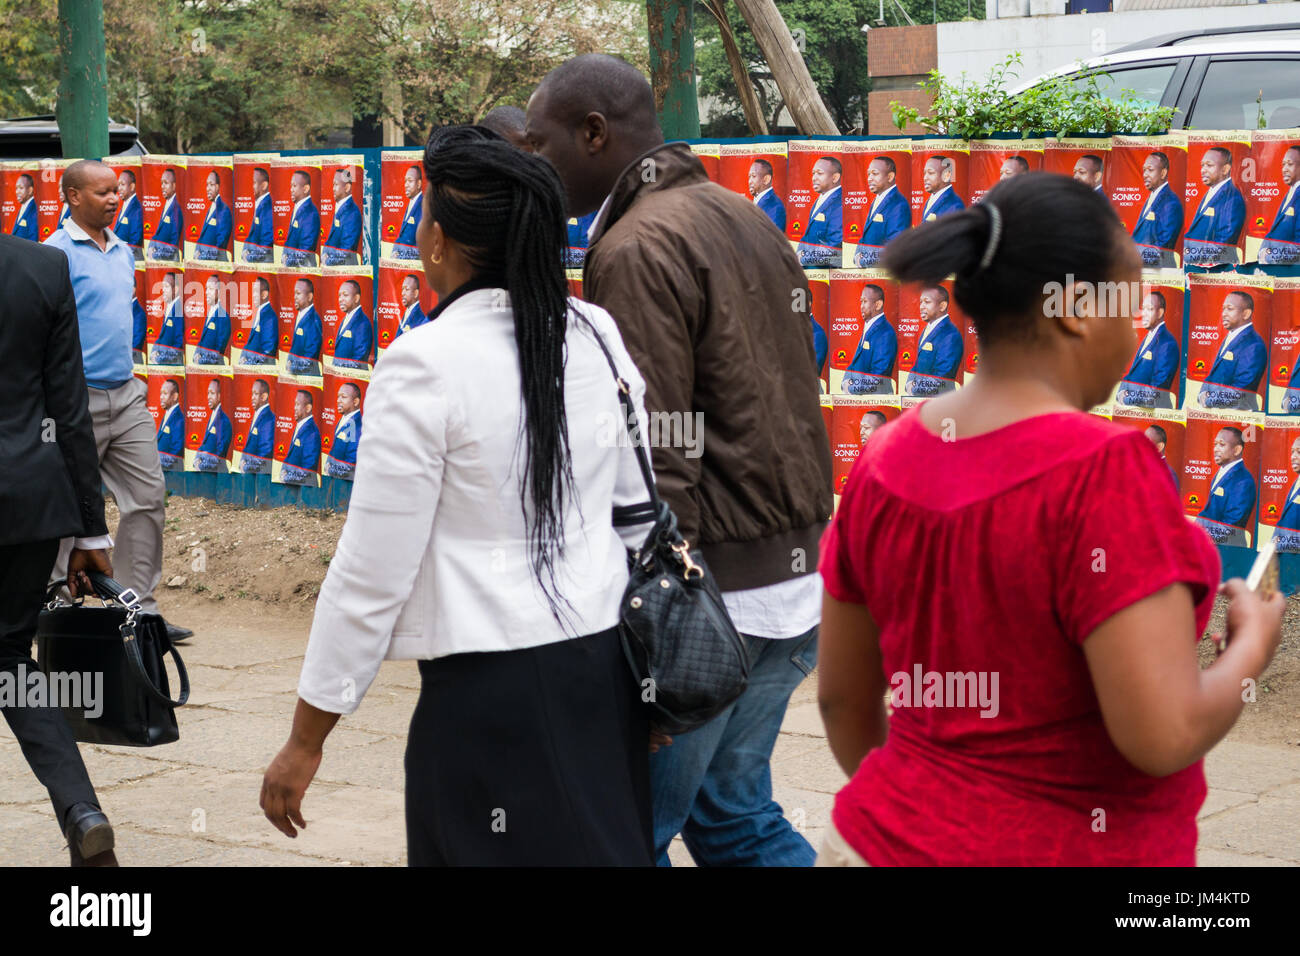 People Walking Past Kenyan Election Candidate Posters On Wall In Nairobi City, Kenya Stock Photo